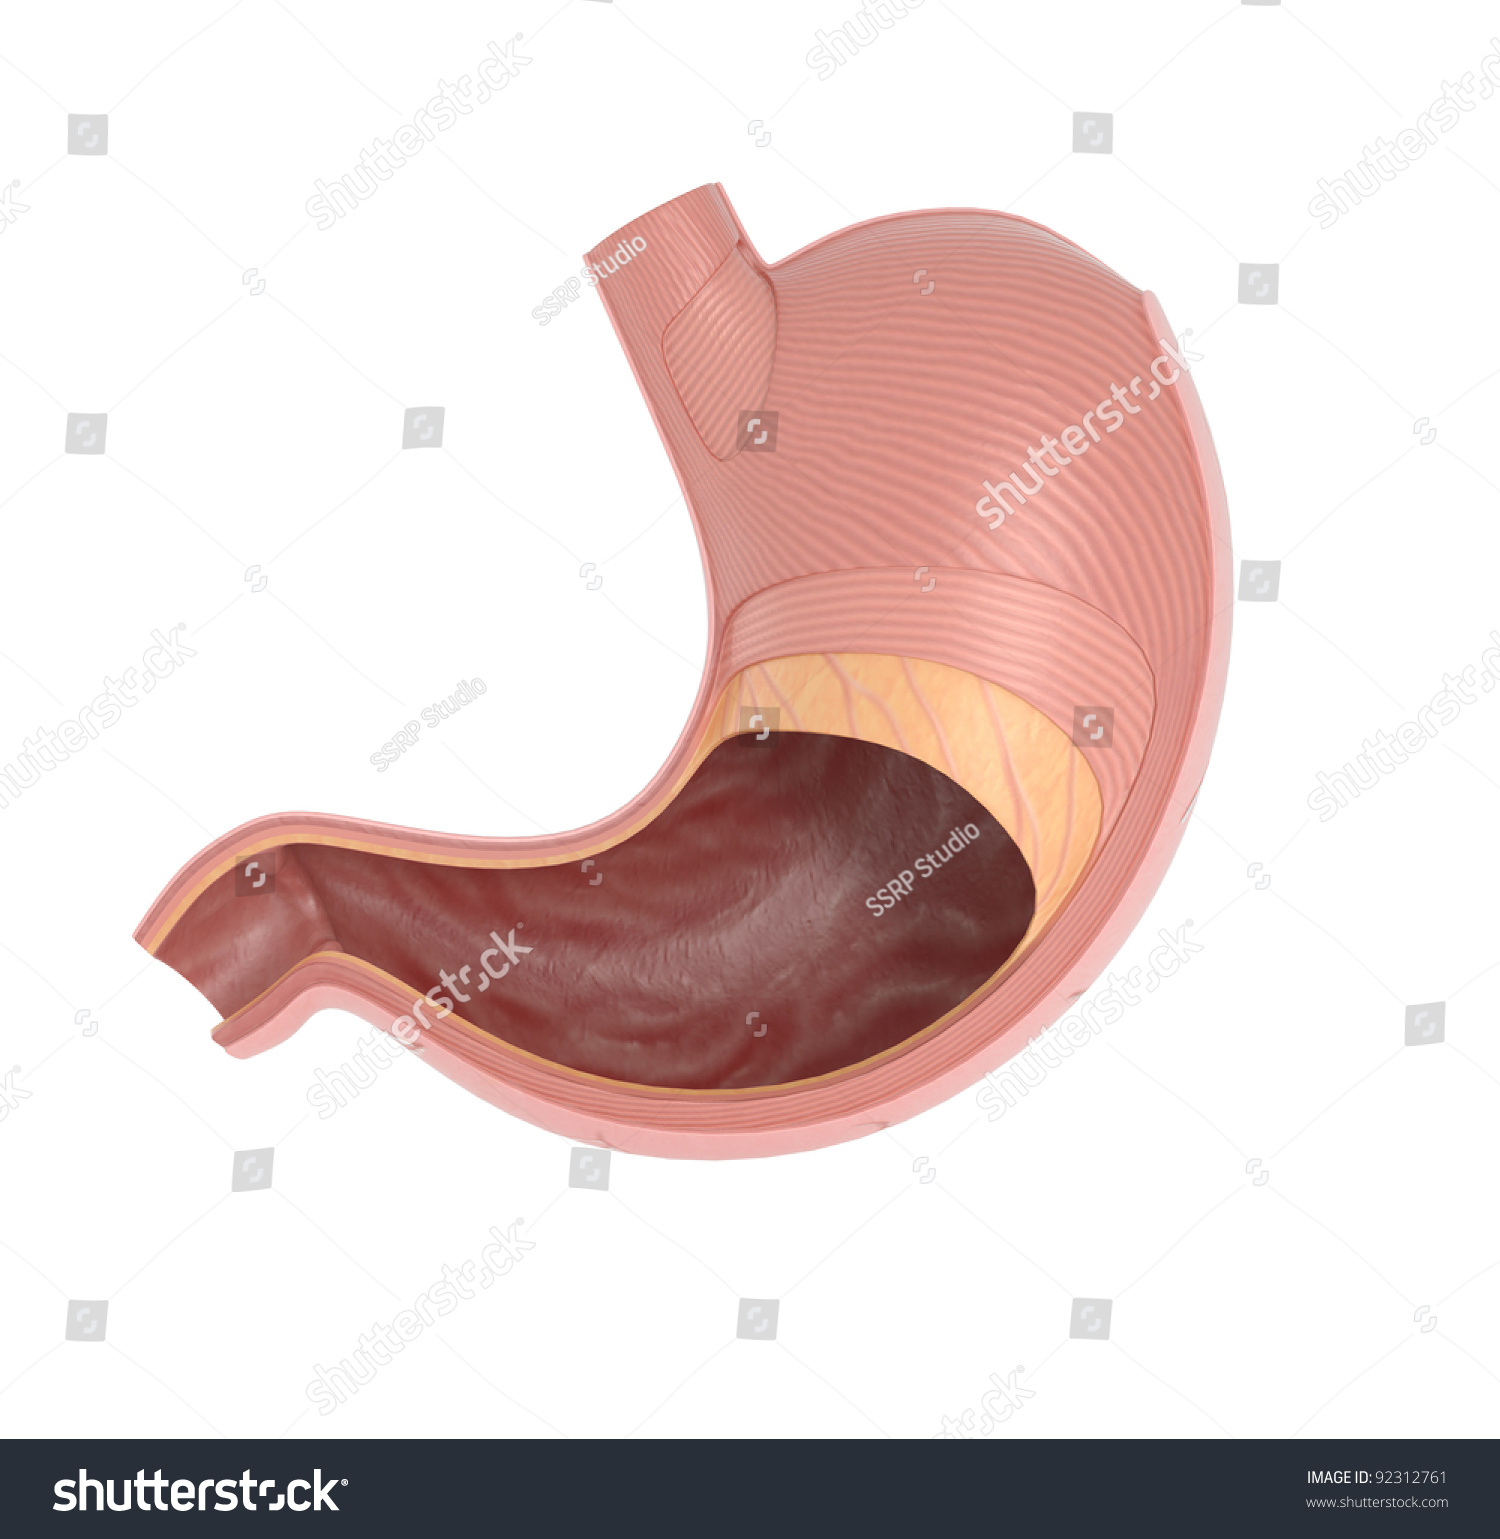 Inside Human Stomach - 3d Illustration - 92312761 : Shutterstock